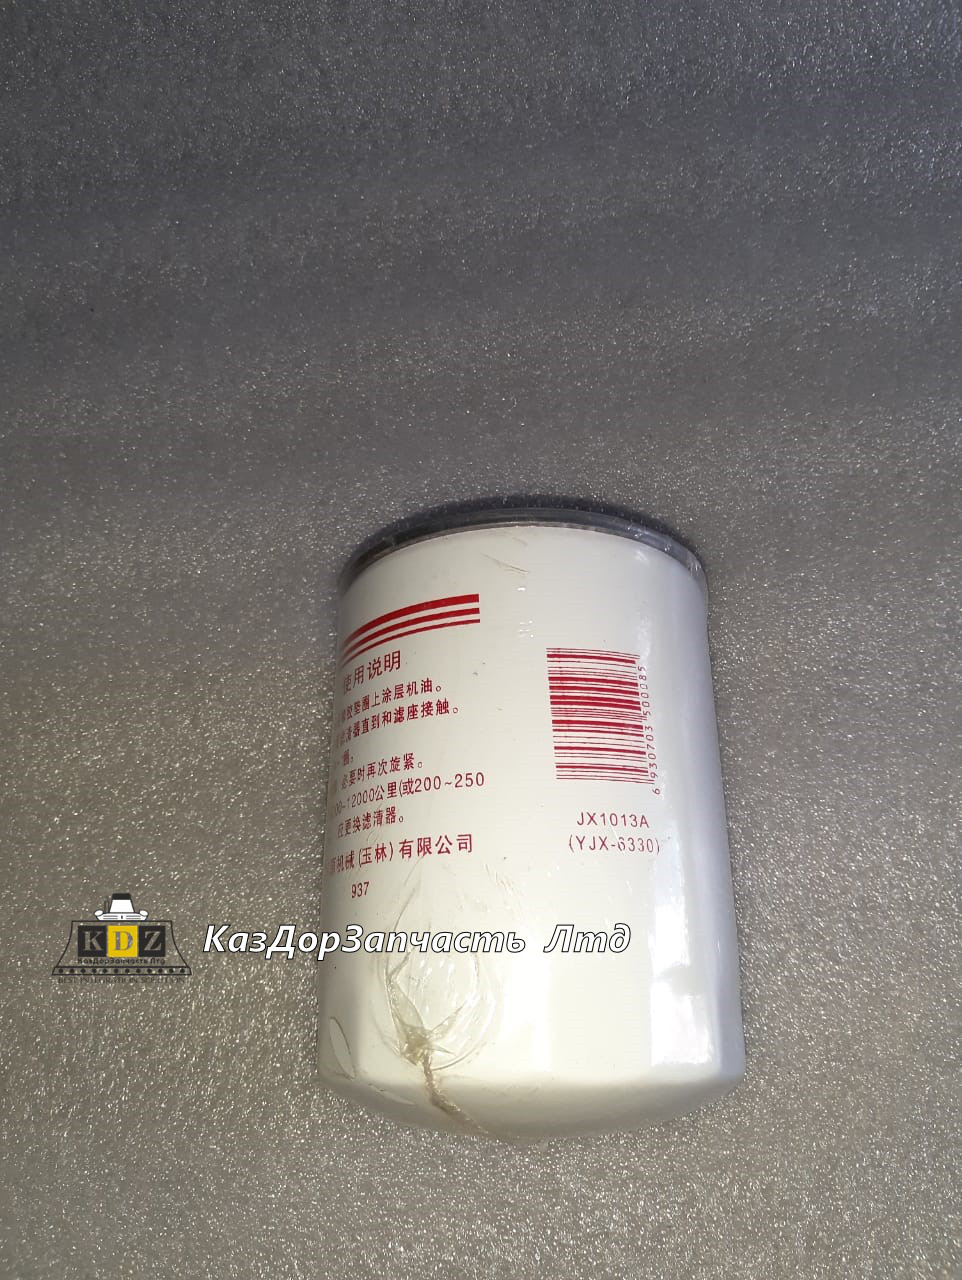 Масляный фильтр JX1013A/M3000-1012240A (YuChai)